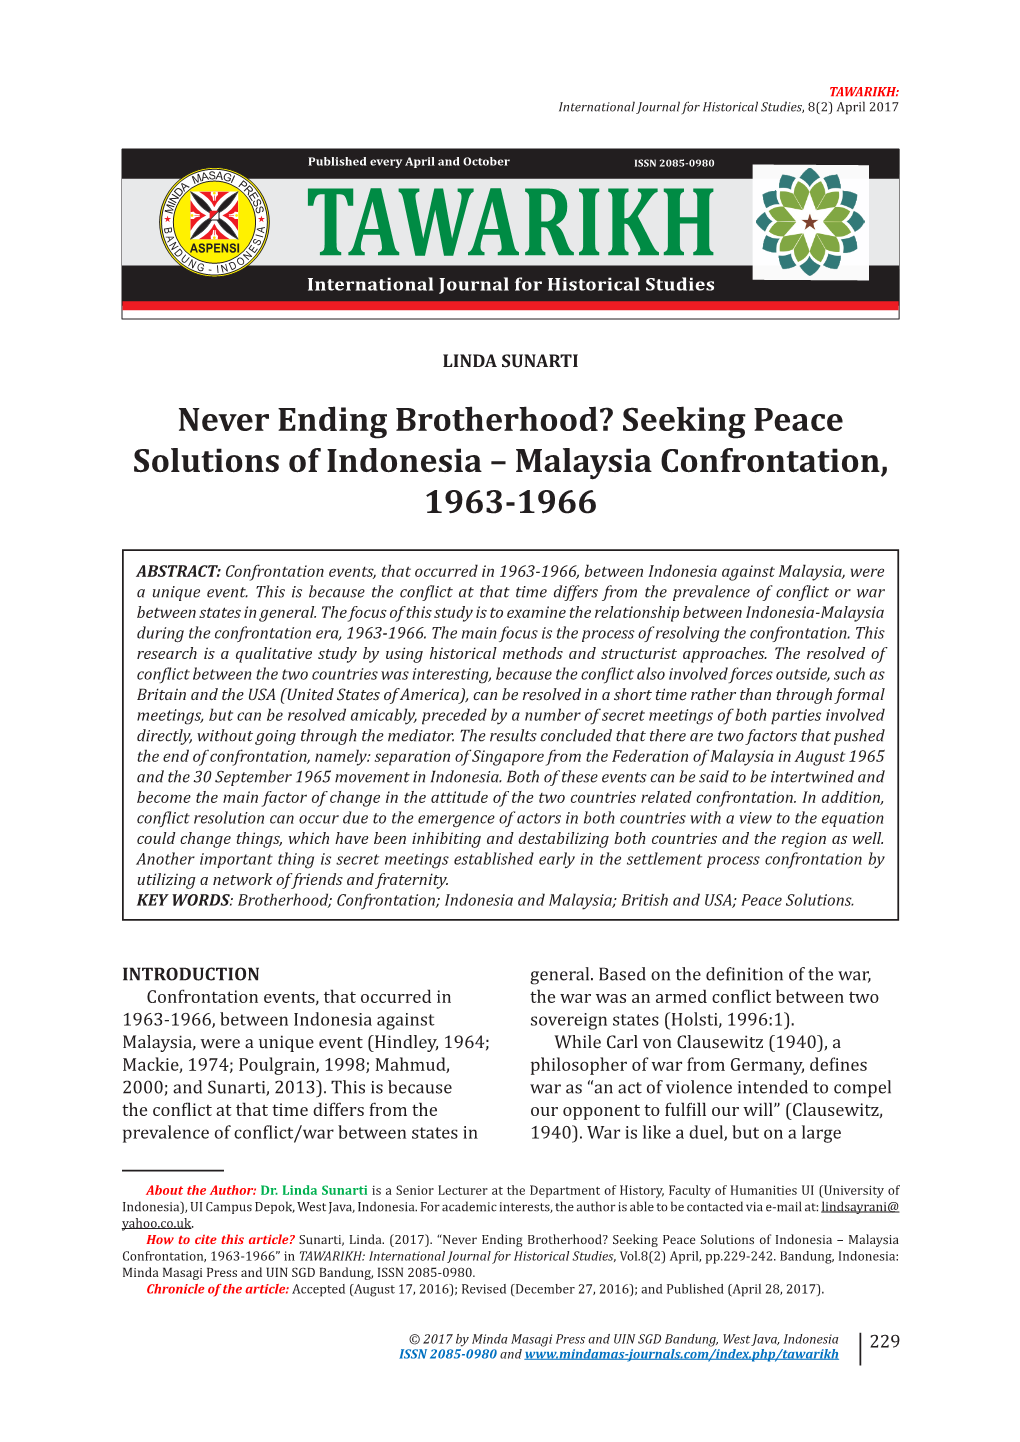 Seeking Peace Solutions of Indonesia – Malaysia Confrontation, 1963-1966